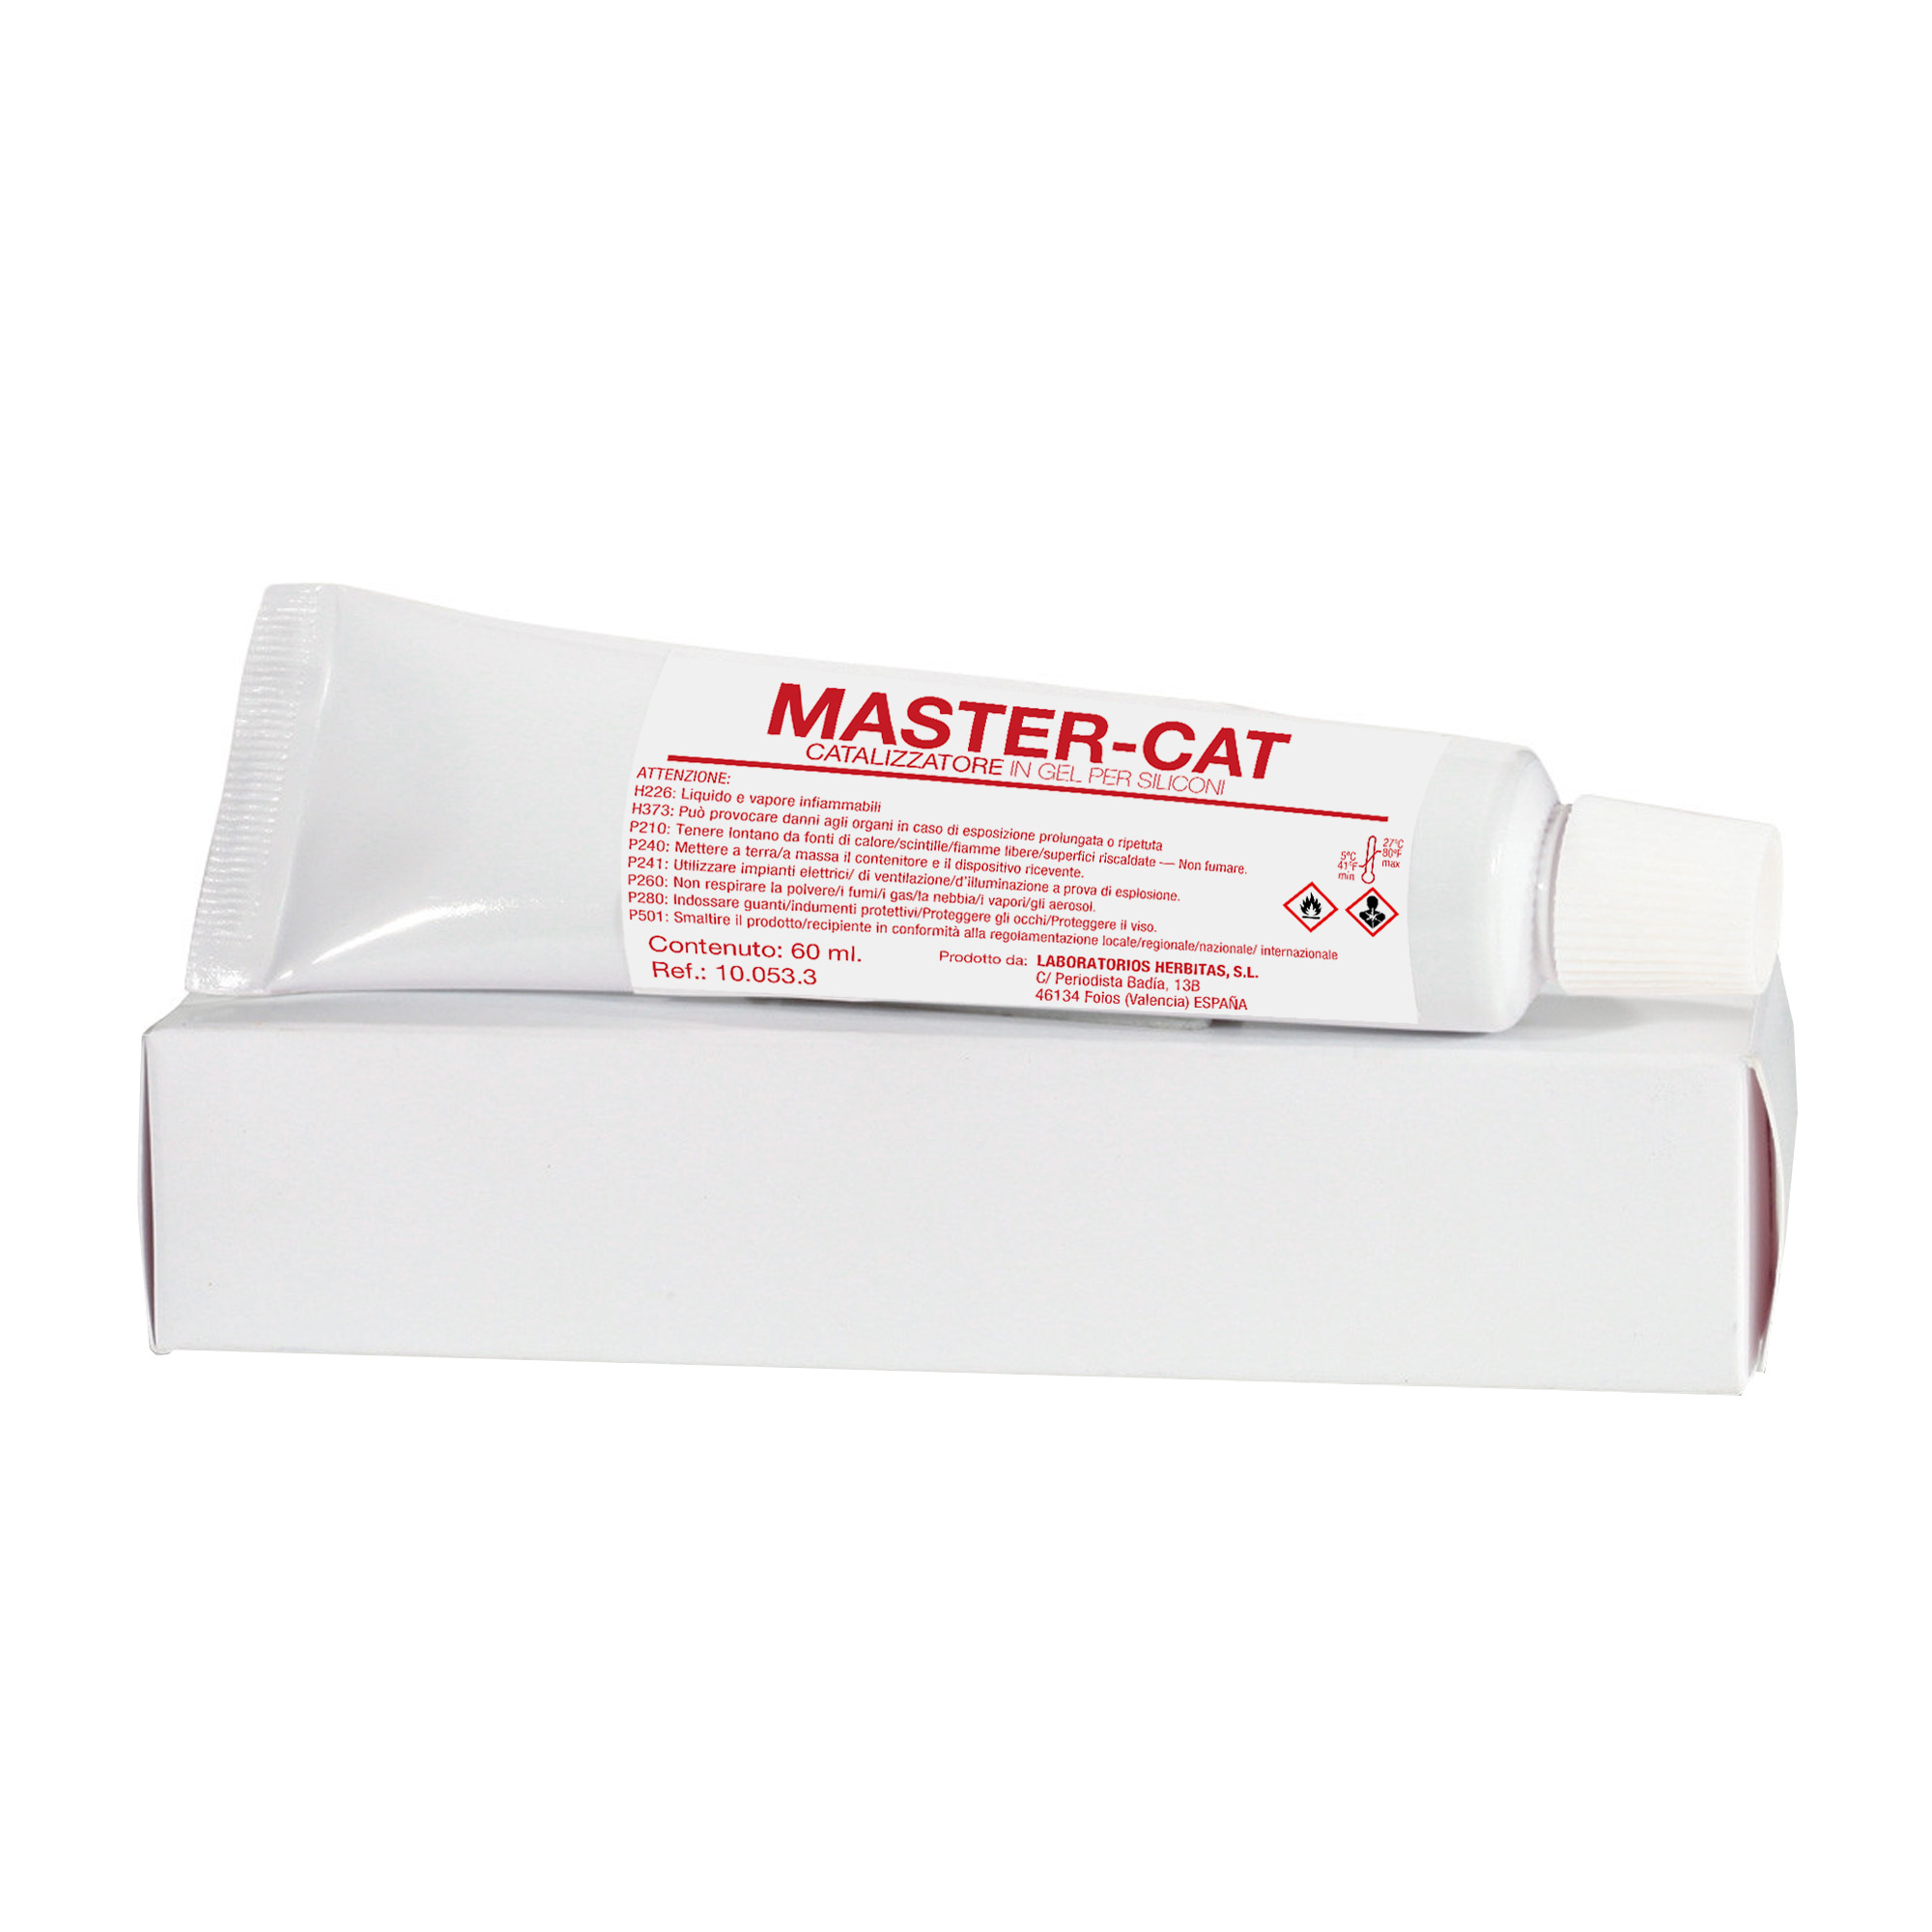 Catalyseur Master Cat en gel 40 ml